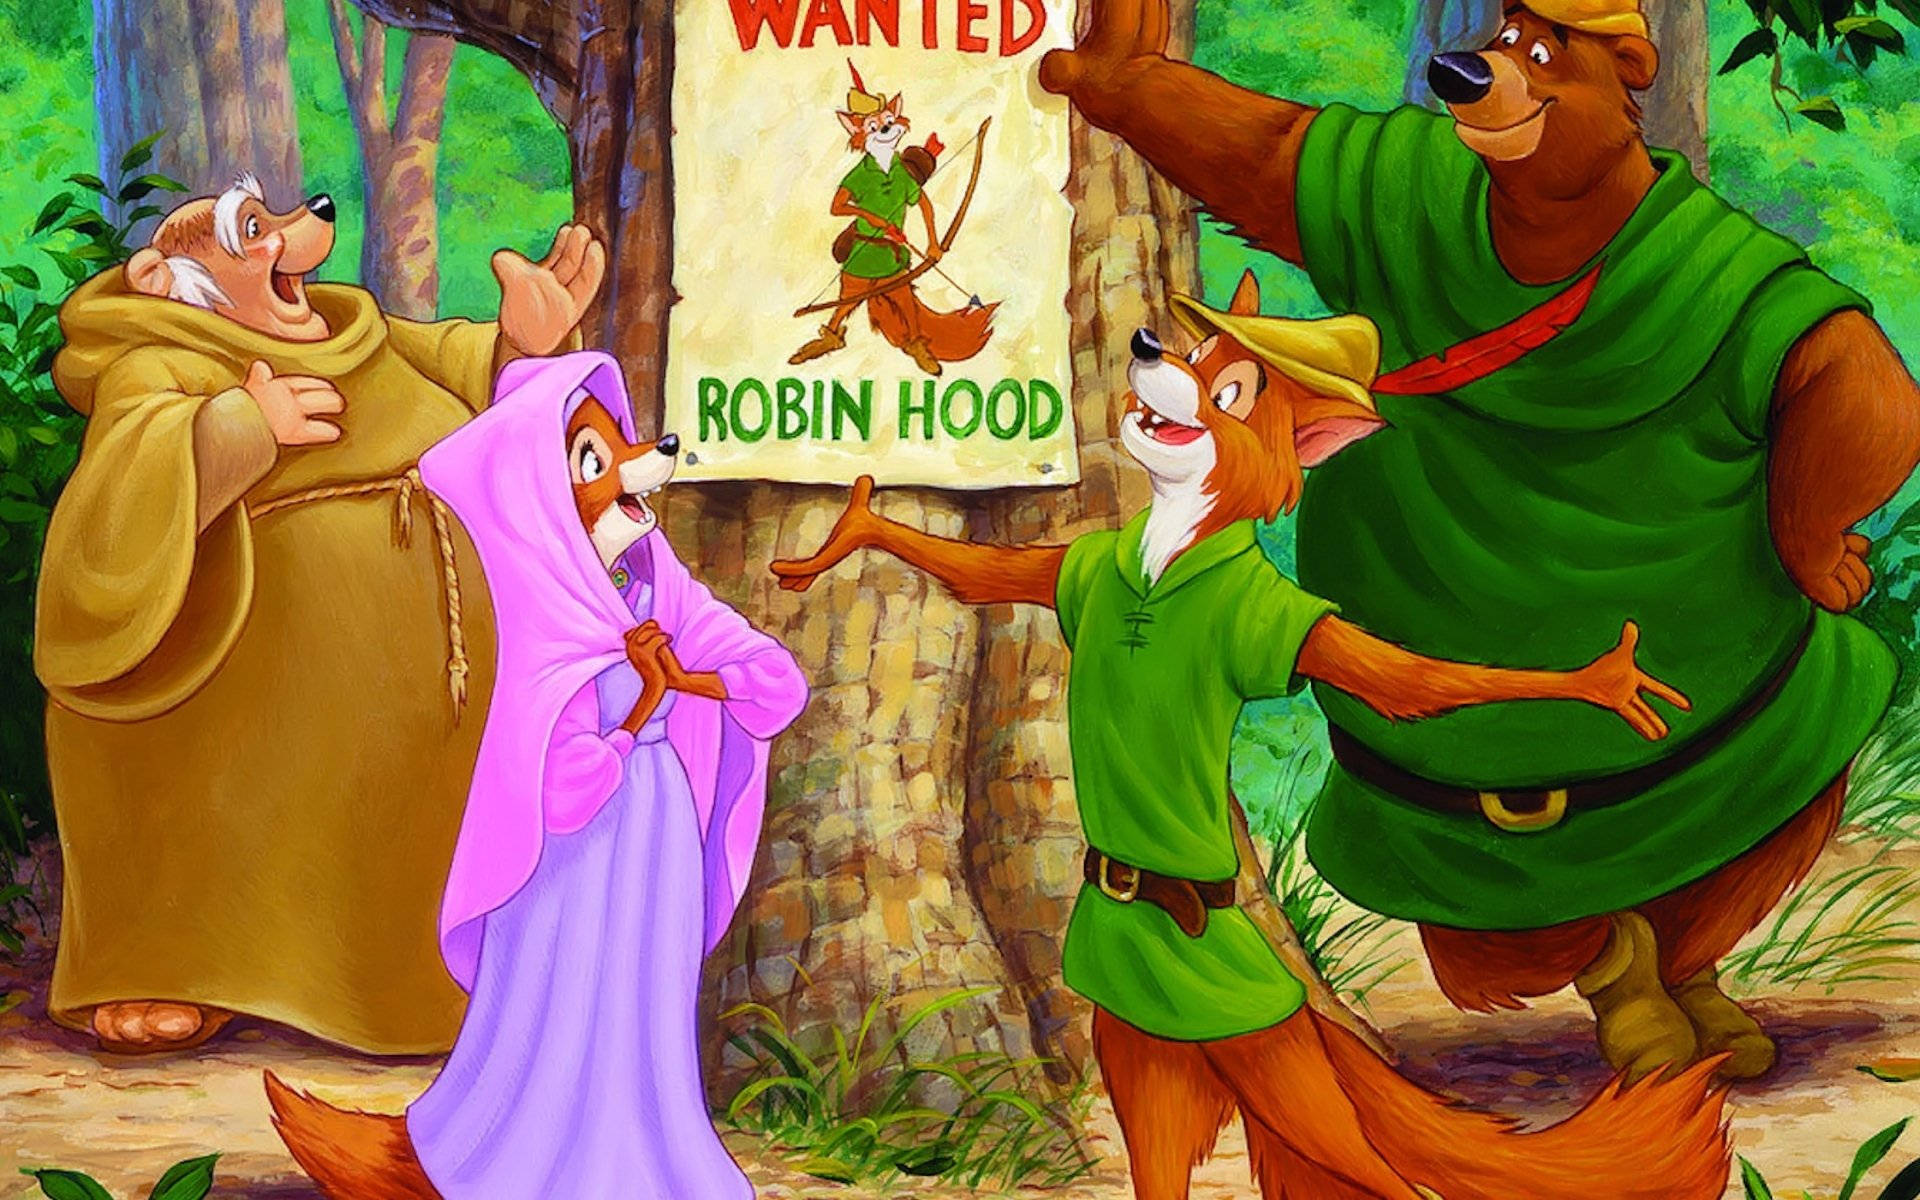 Robin Hood Cartoon Wanted Poster Background